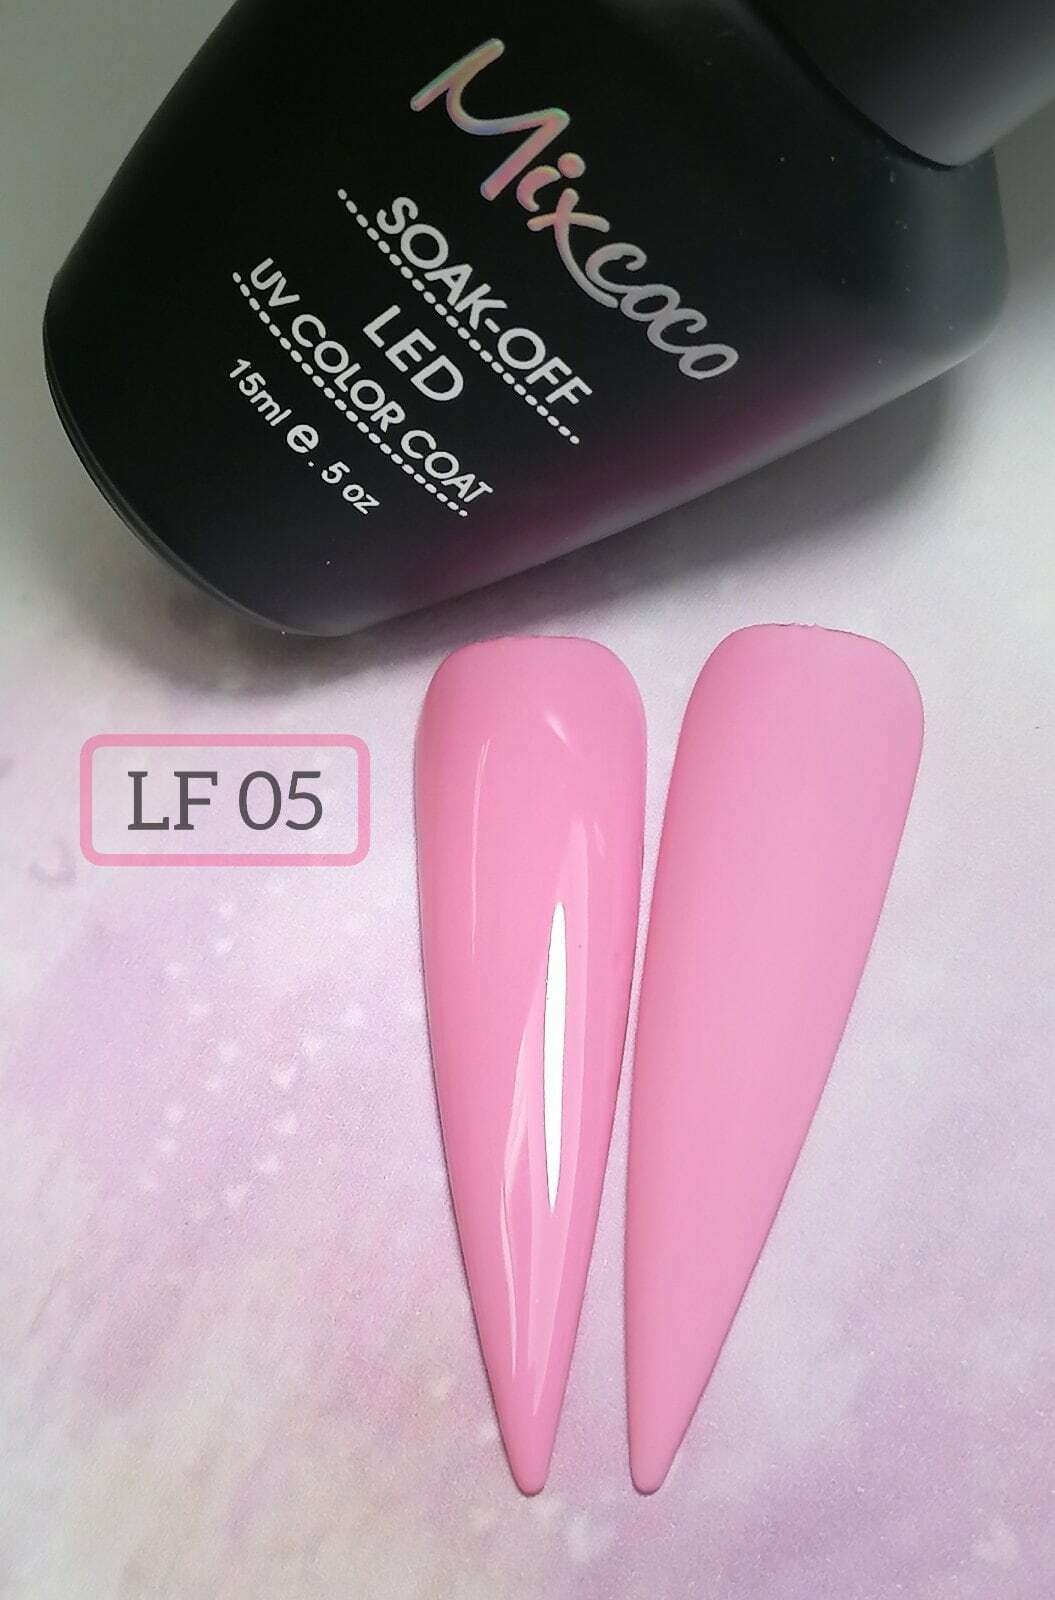 LF-005 Ημιμόνιμο Βερνίκι Mixcoco 15ml Pink Flavor (Ημιμόνιμα Βερνίκια)